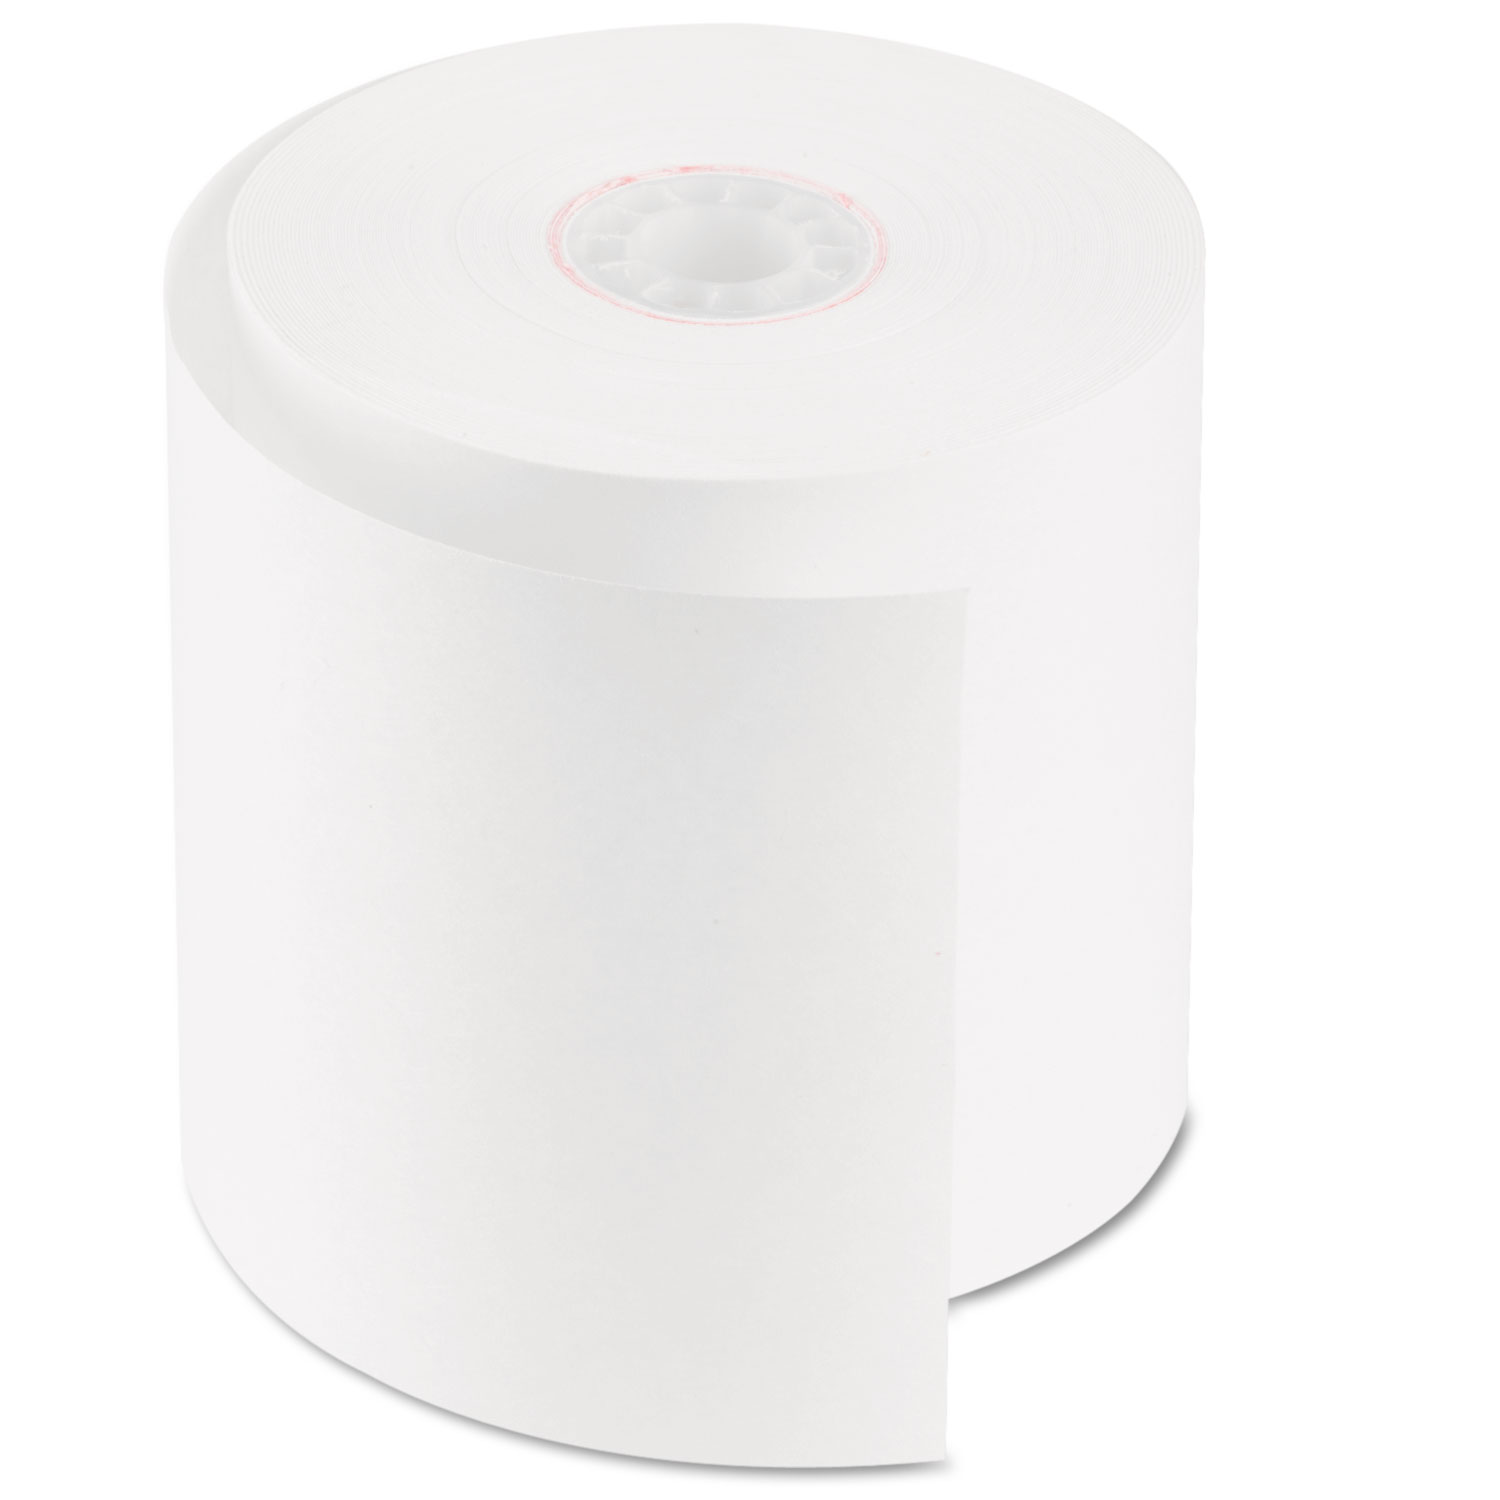  Iconex 7701 Impact Bond Paper Rolls, 2.75 x 150 ft, White, 50/Carton (ICX90742236) 